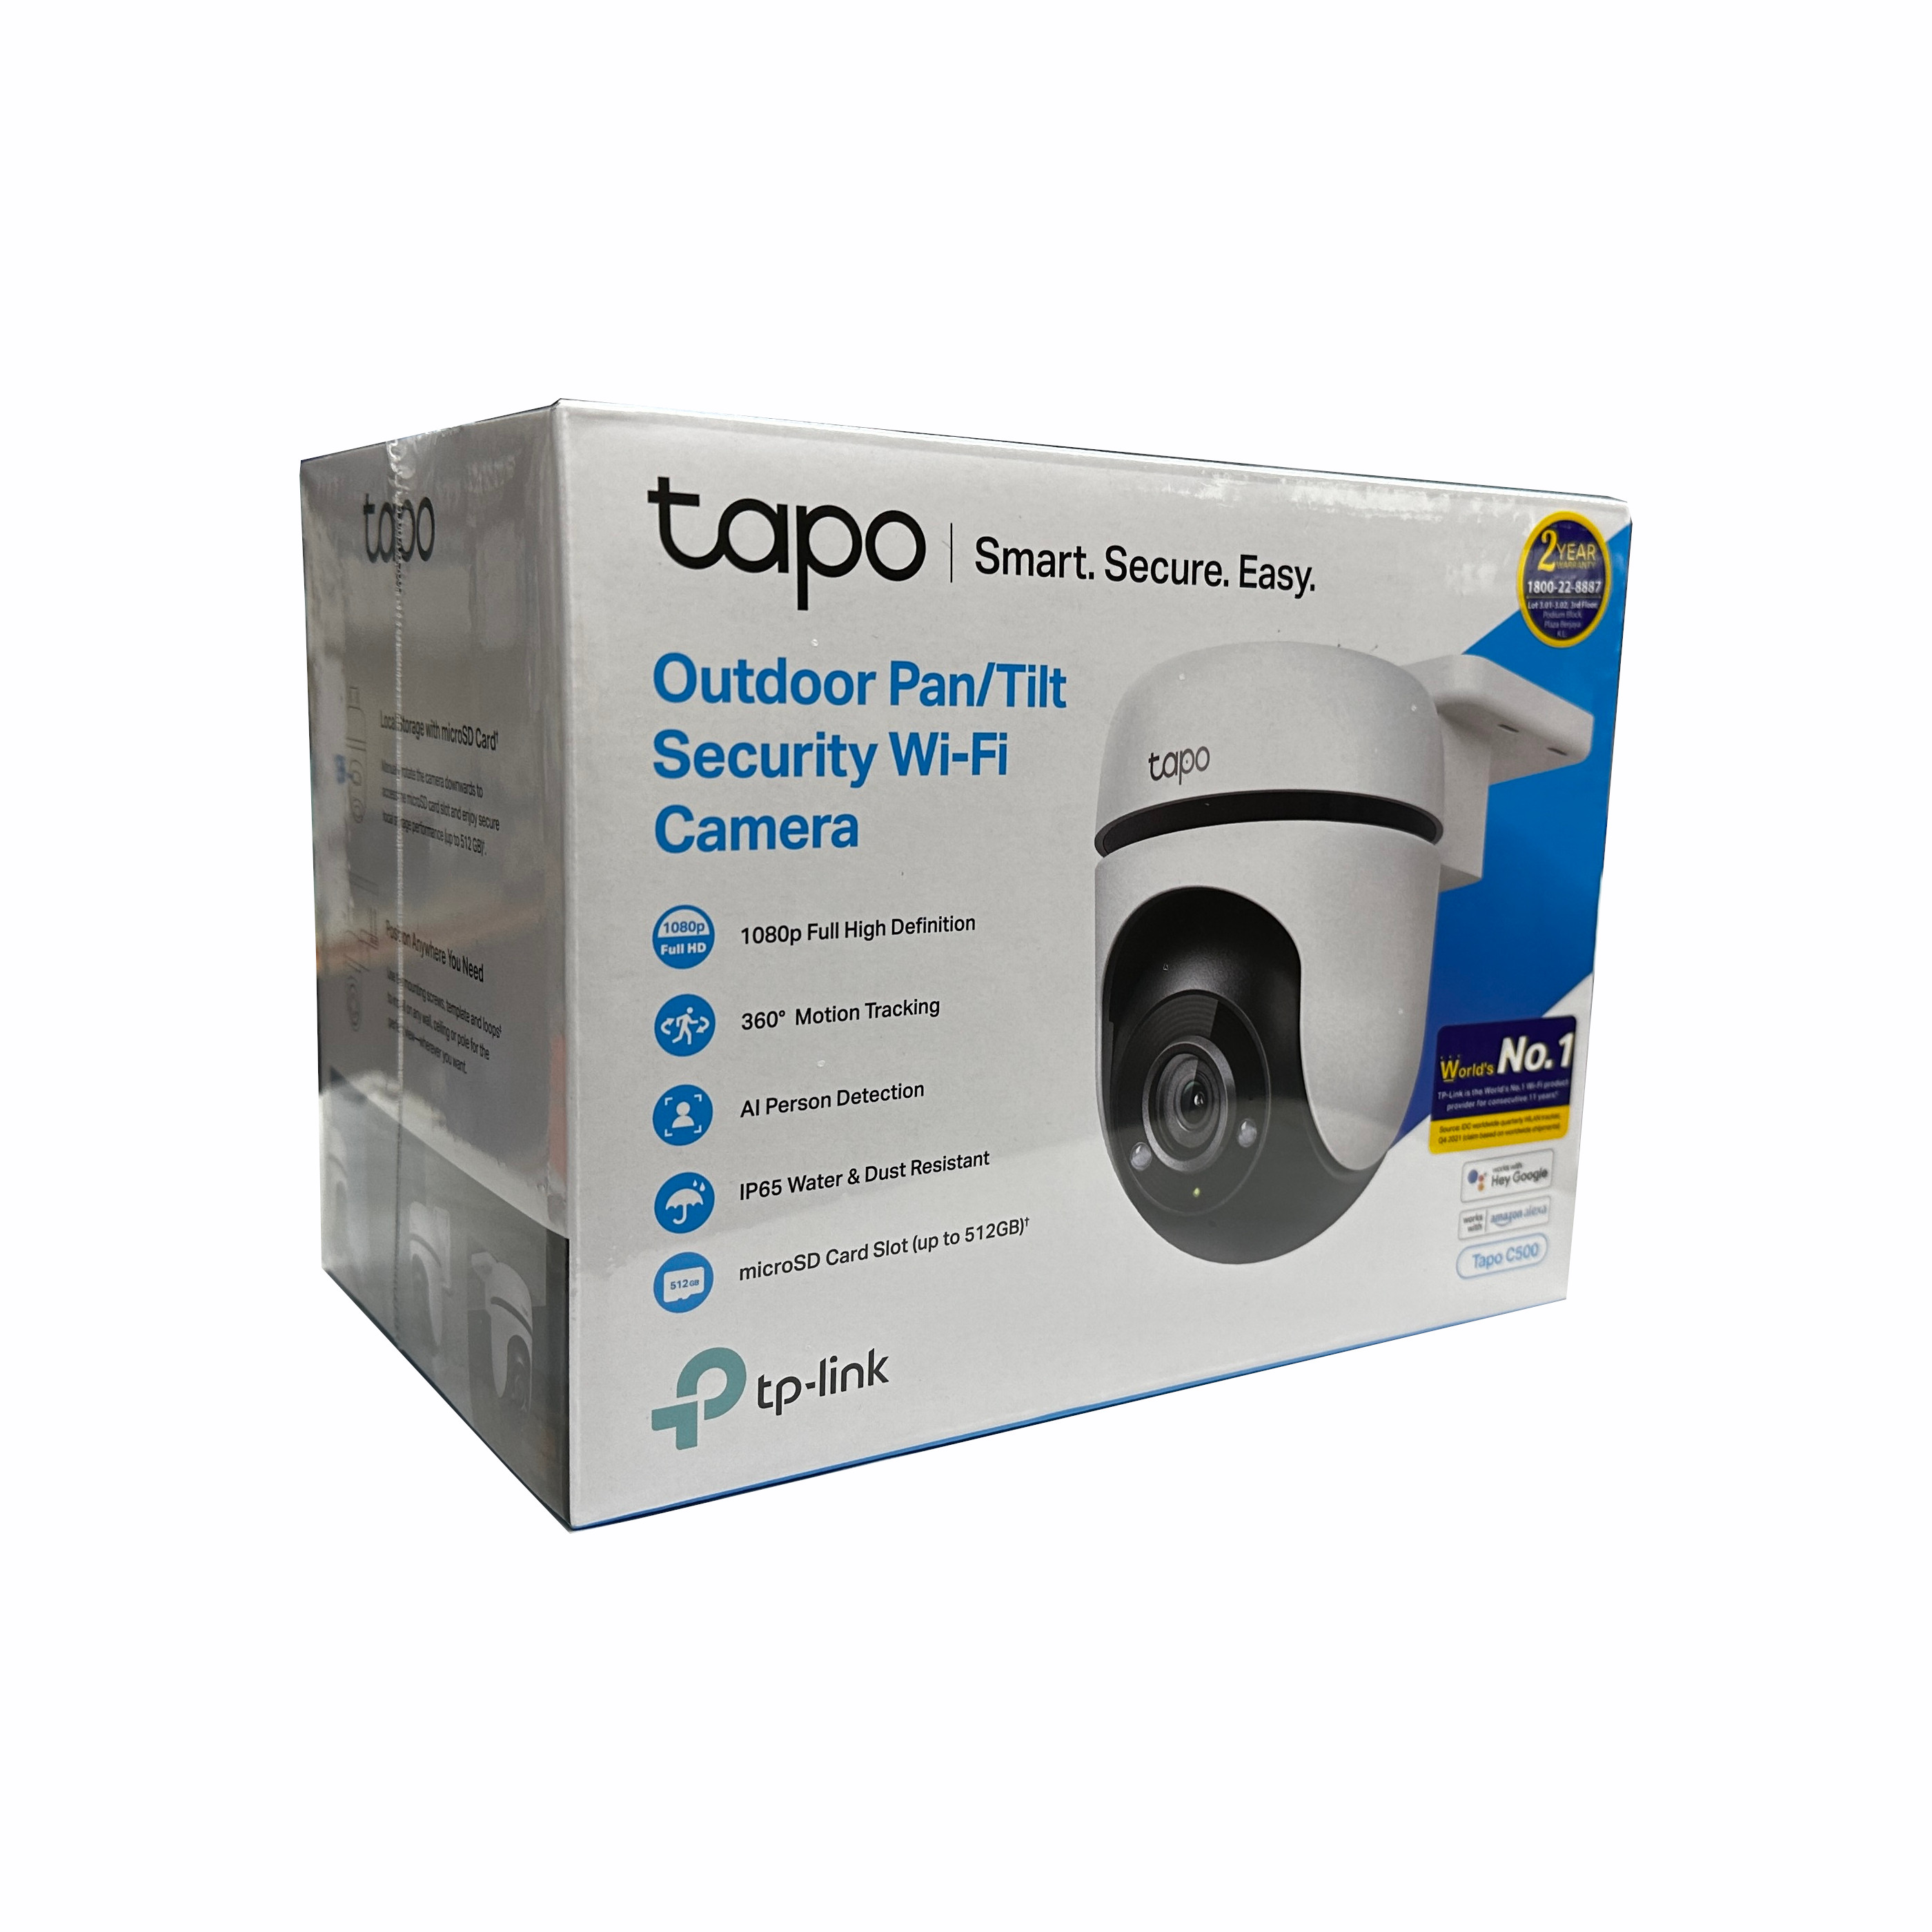 TP-LINK TAPO C500 2MP OUTDOOR PAN TILT SECURITY WIFI IP CAMERA